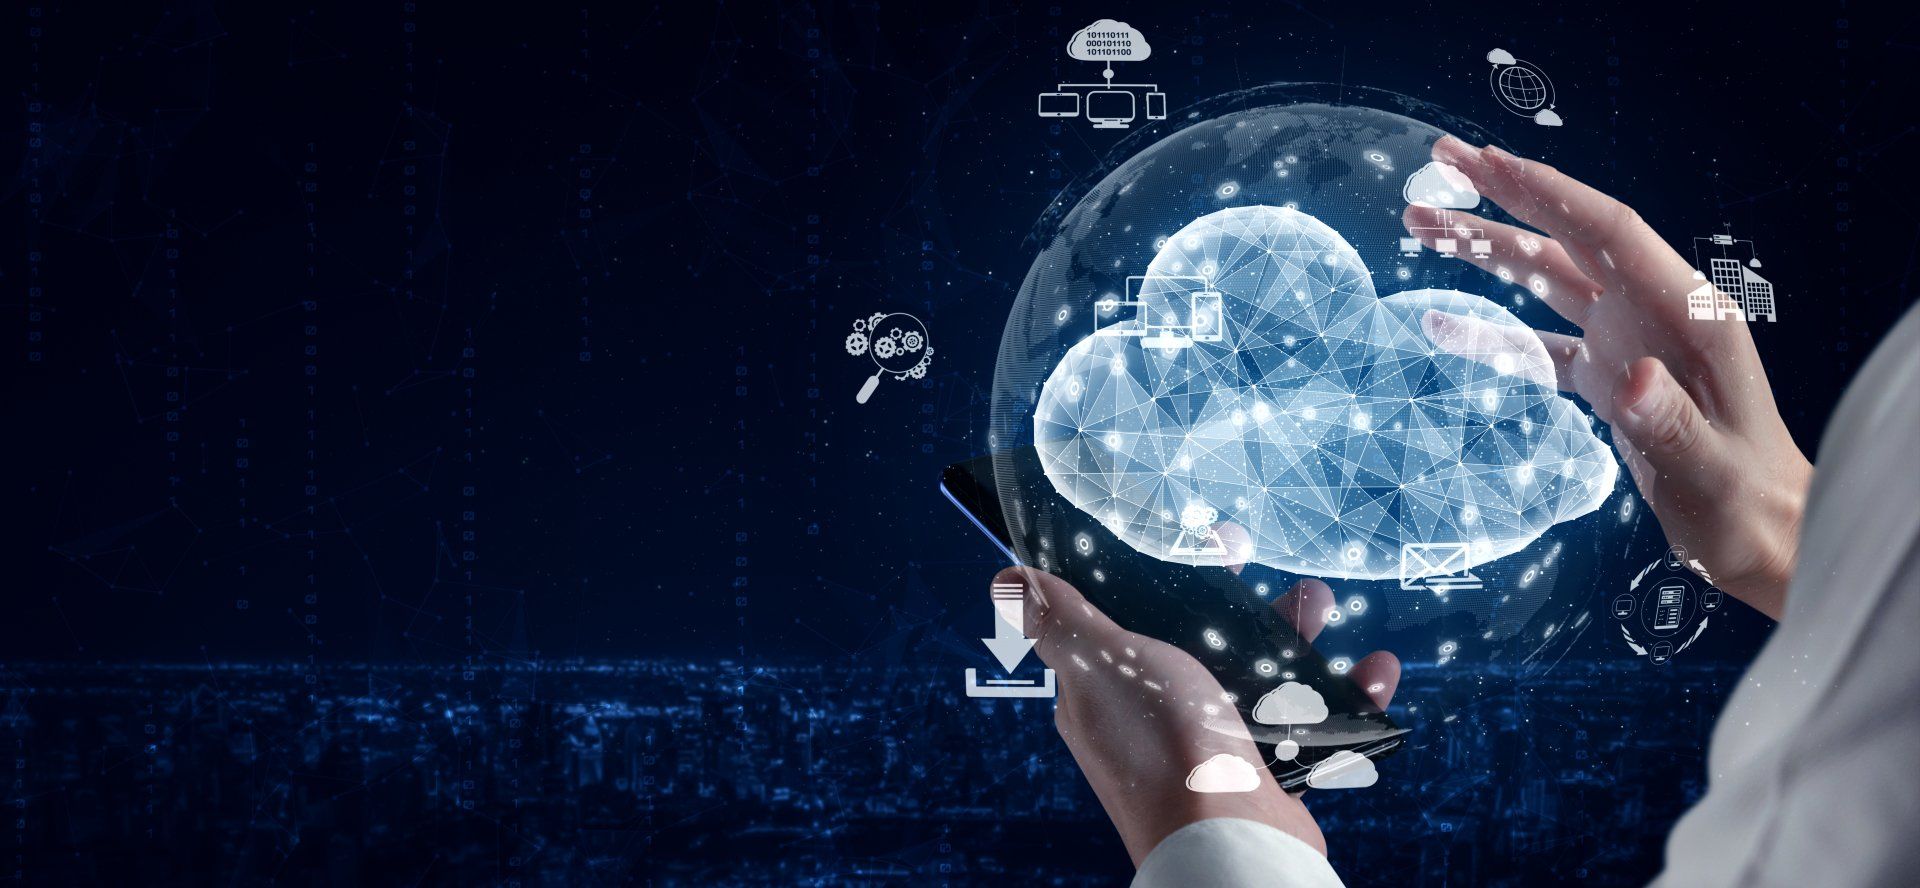 cloud computing technology image